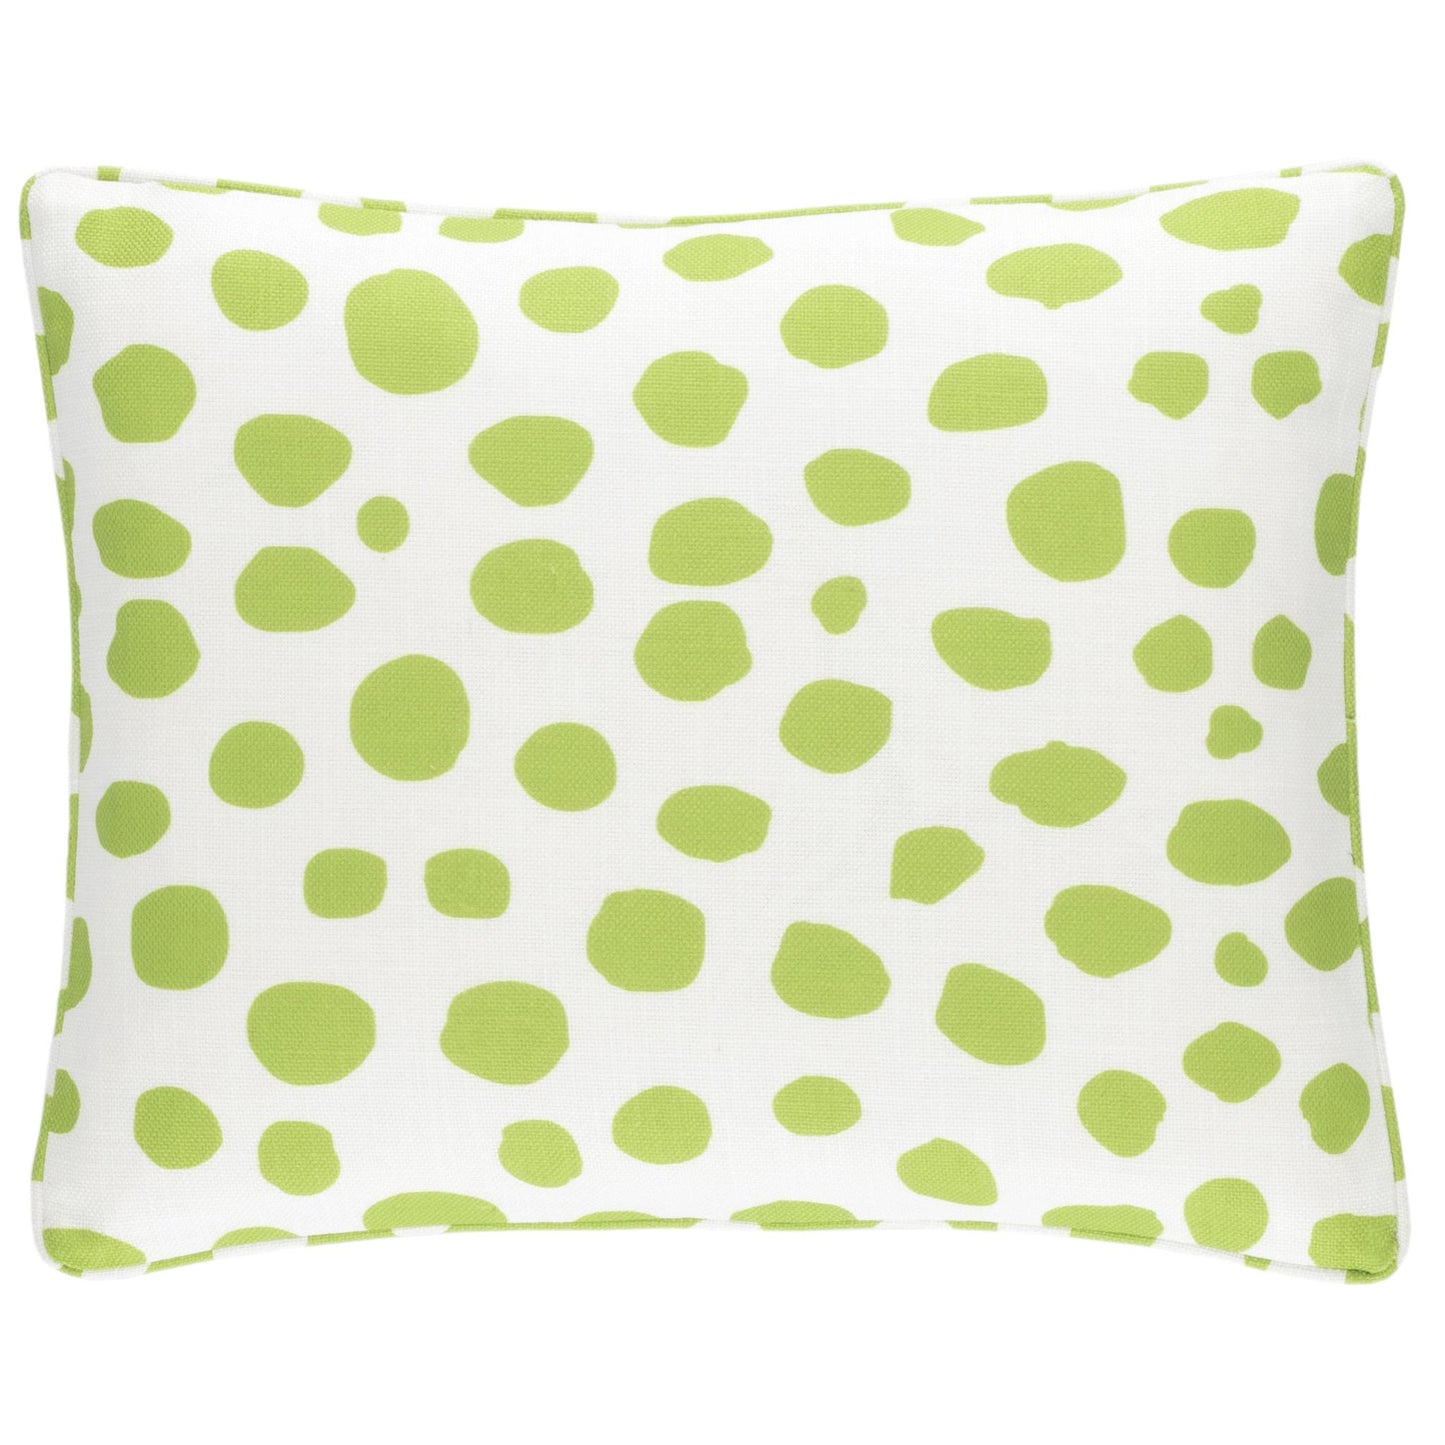 Pillow - "Spot On" Sprout - Indoor/Outdoor - 16" Lumbar